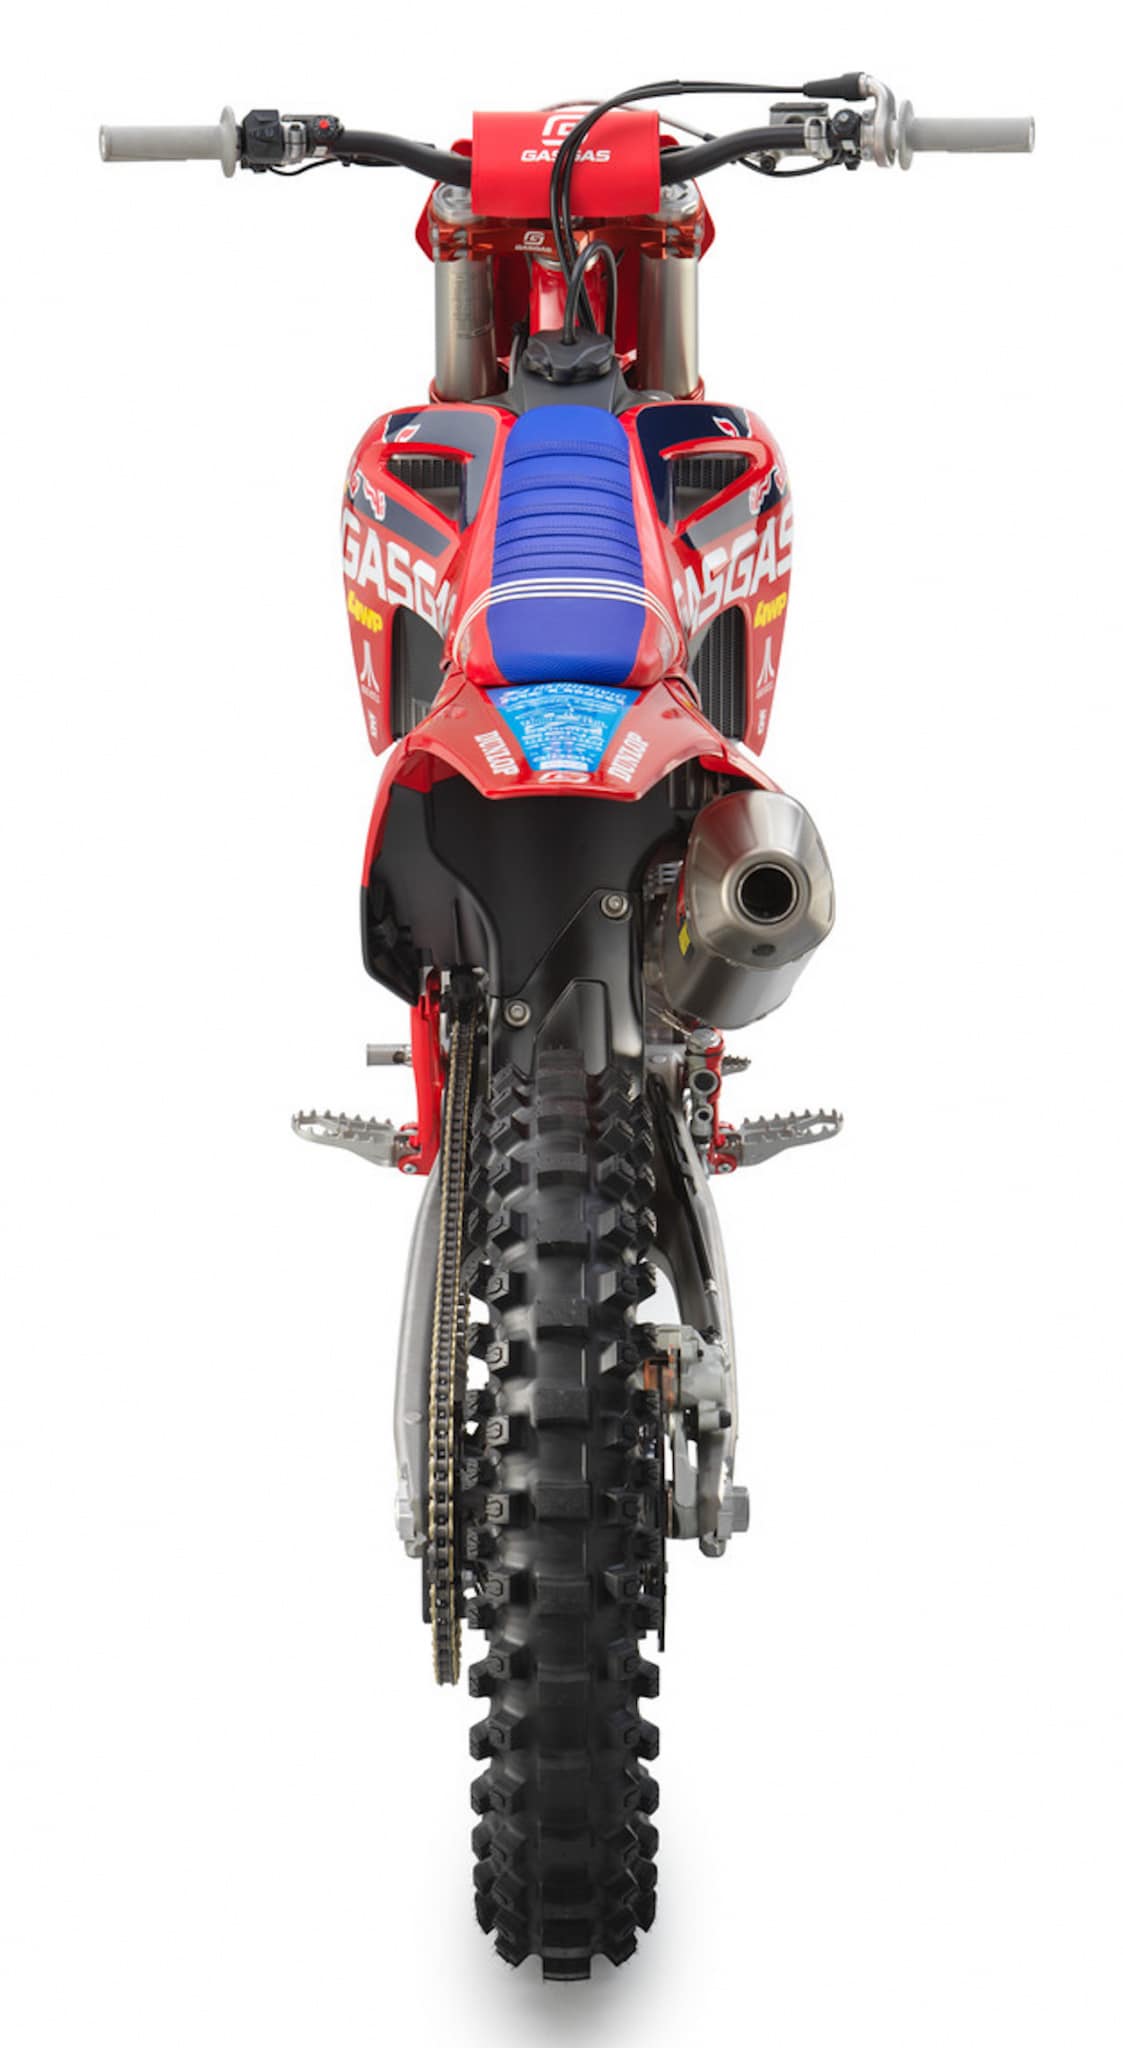 GASGAS MC 450F Troy Lee Designs Motocross Bike-6